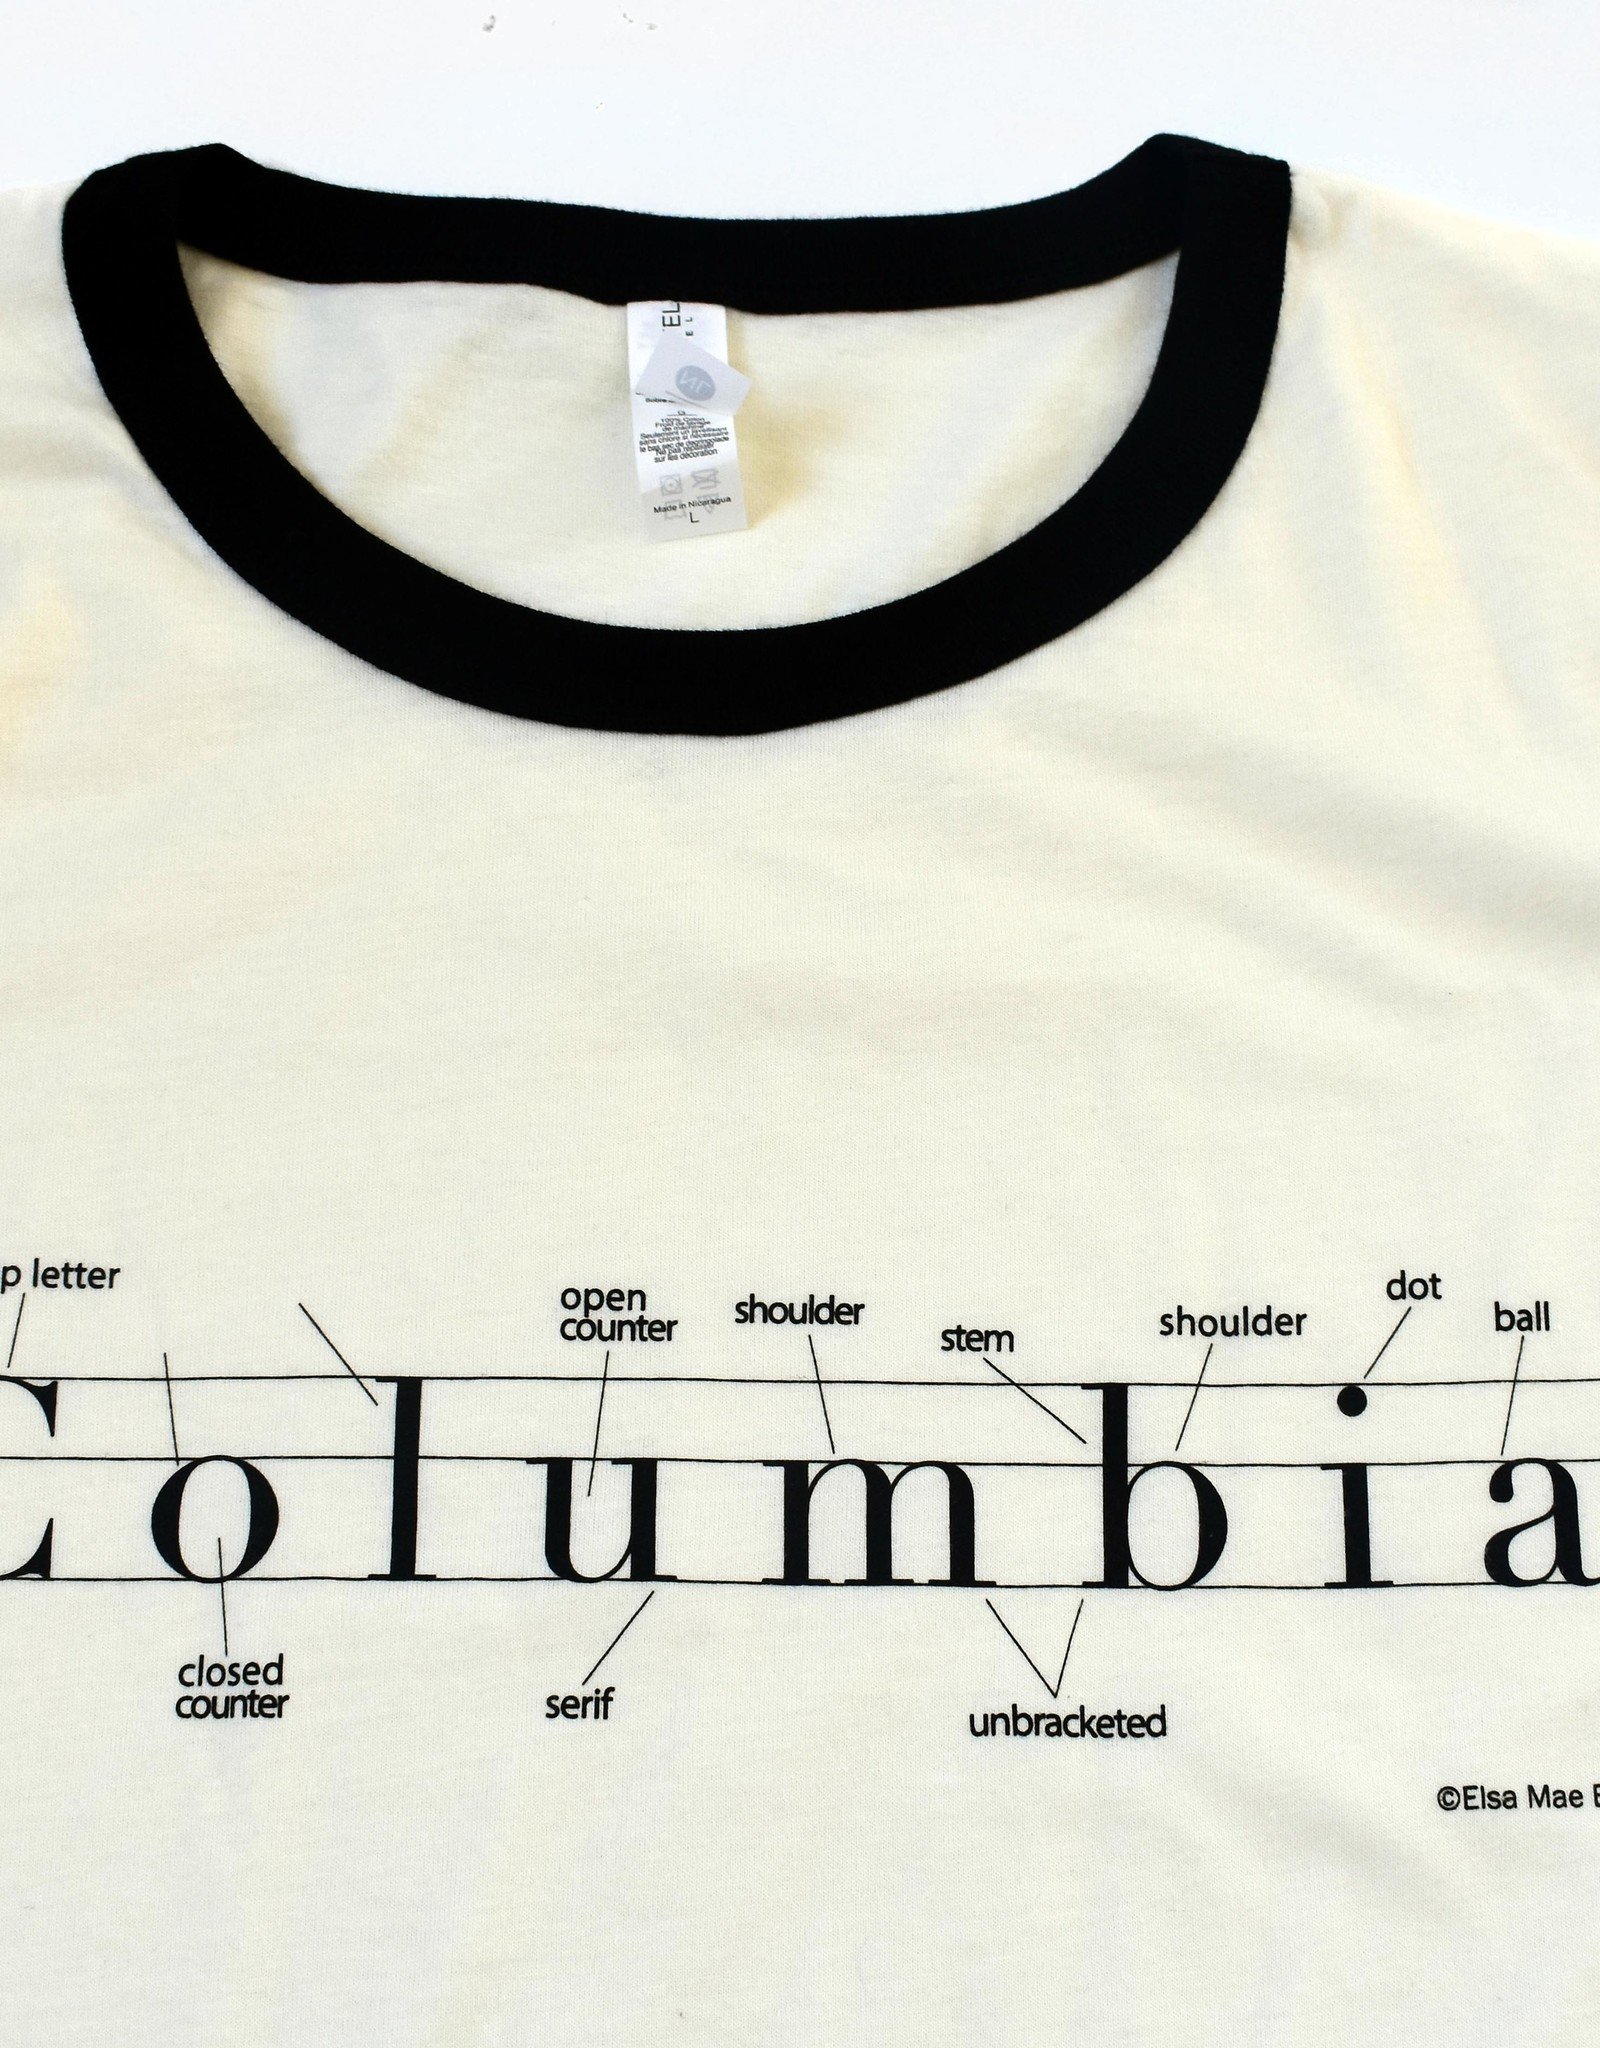 Buy Columbia, By Columbia Columbia Ringer T-Shirt